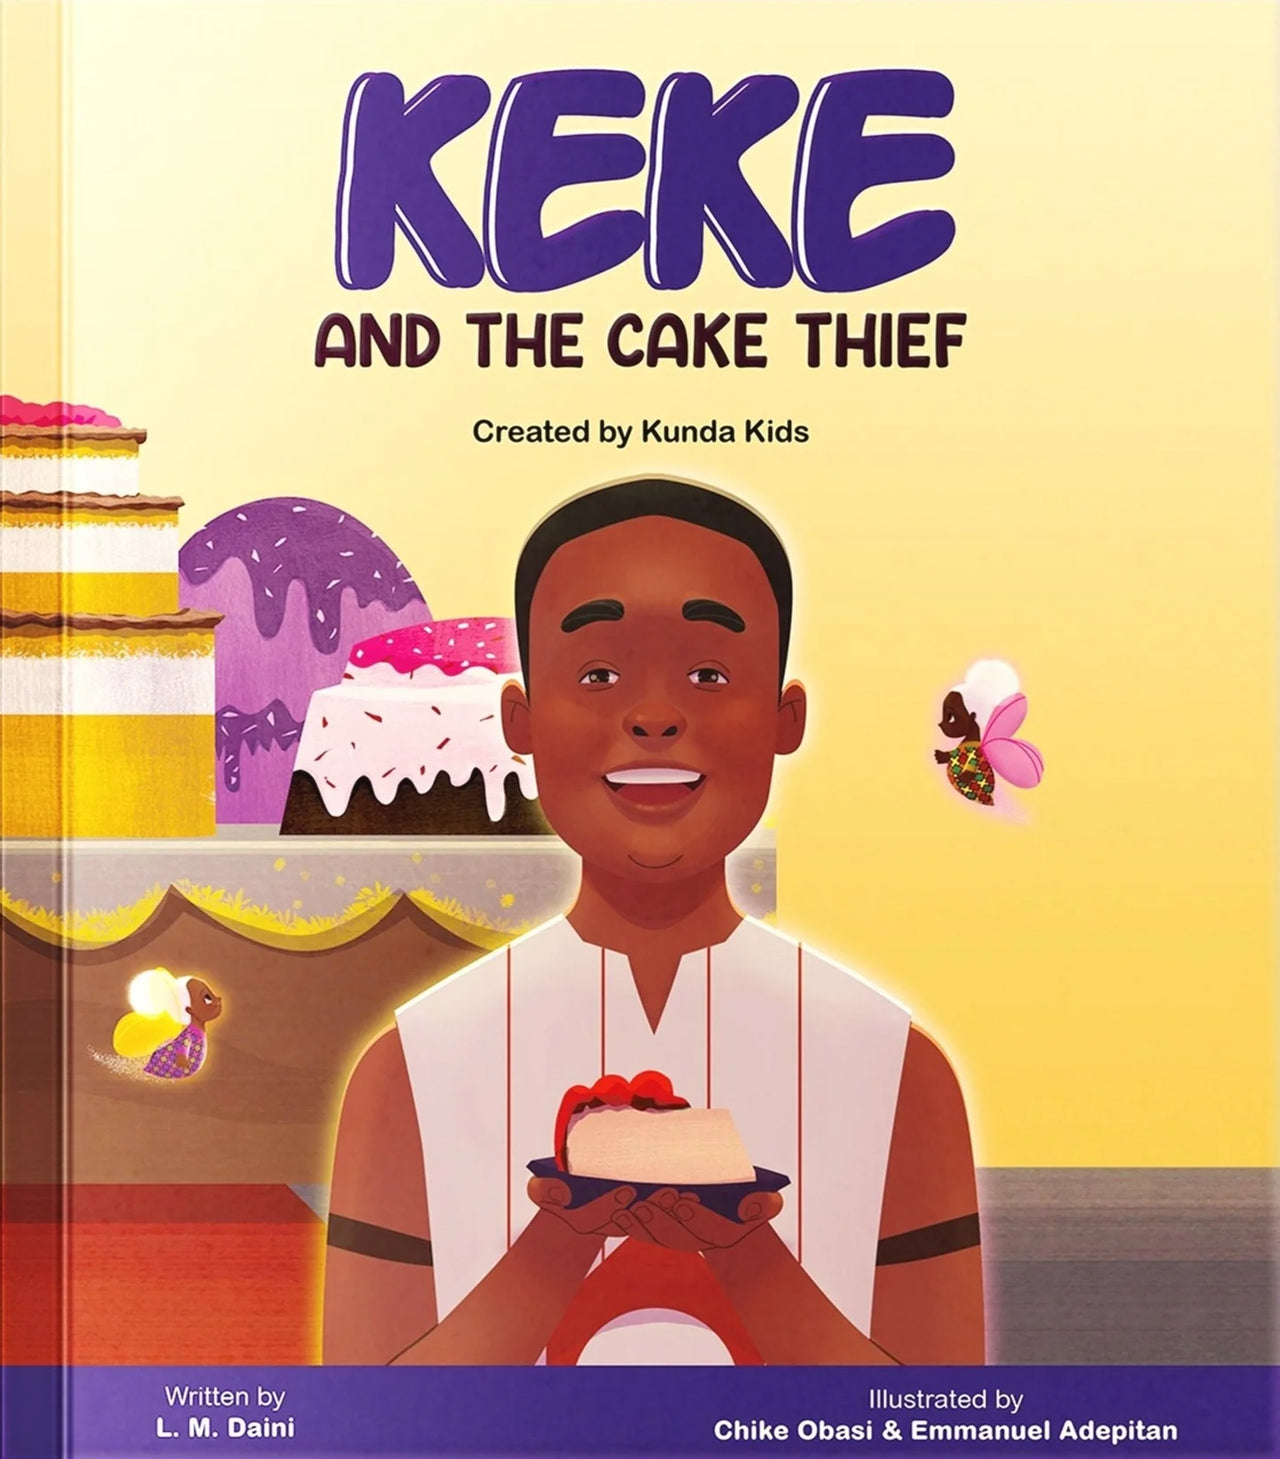 Keke and the Cake Thief by L.M. Daini